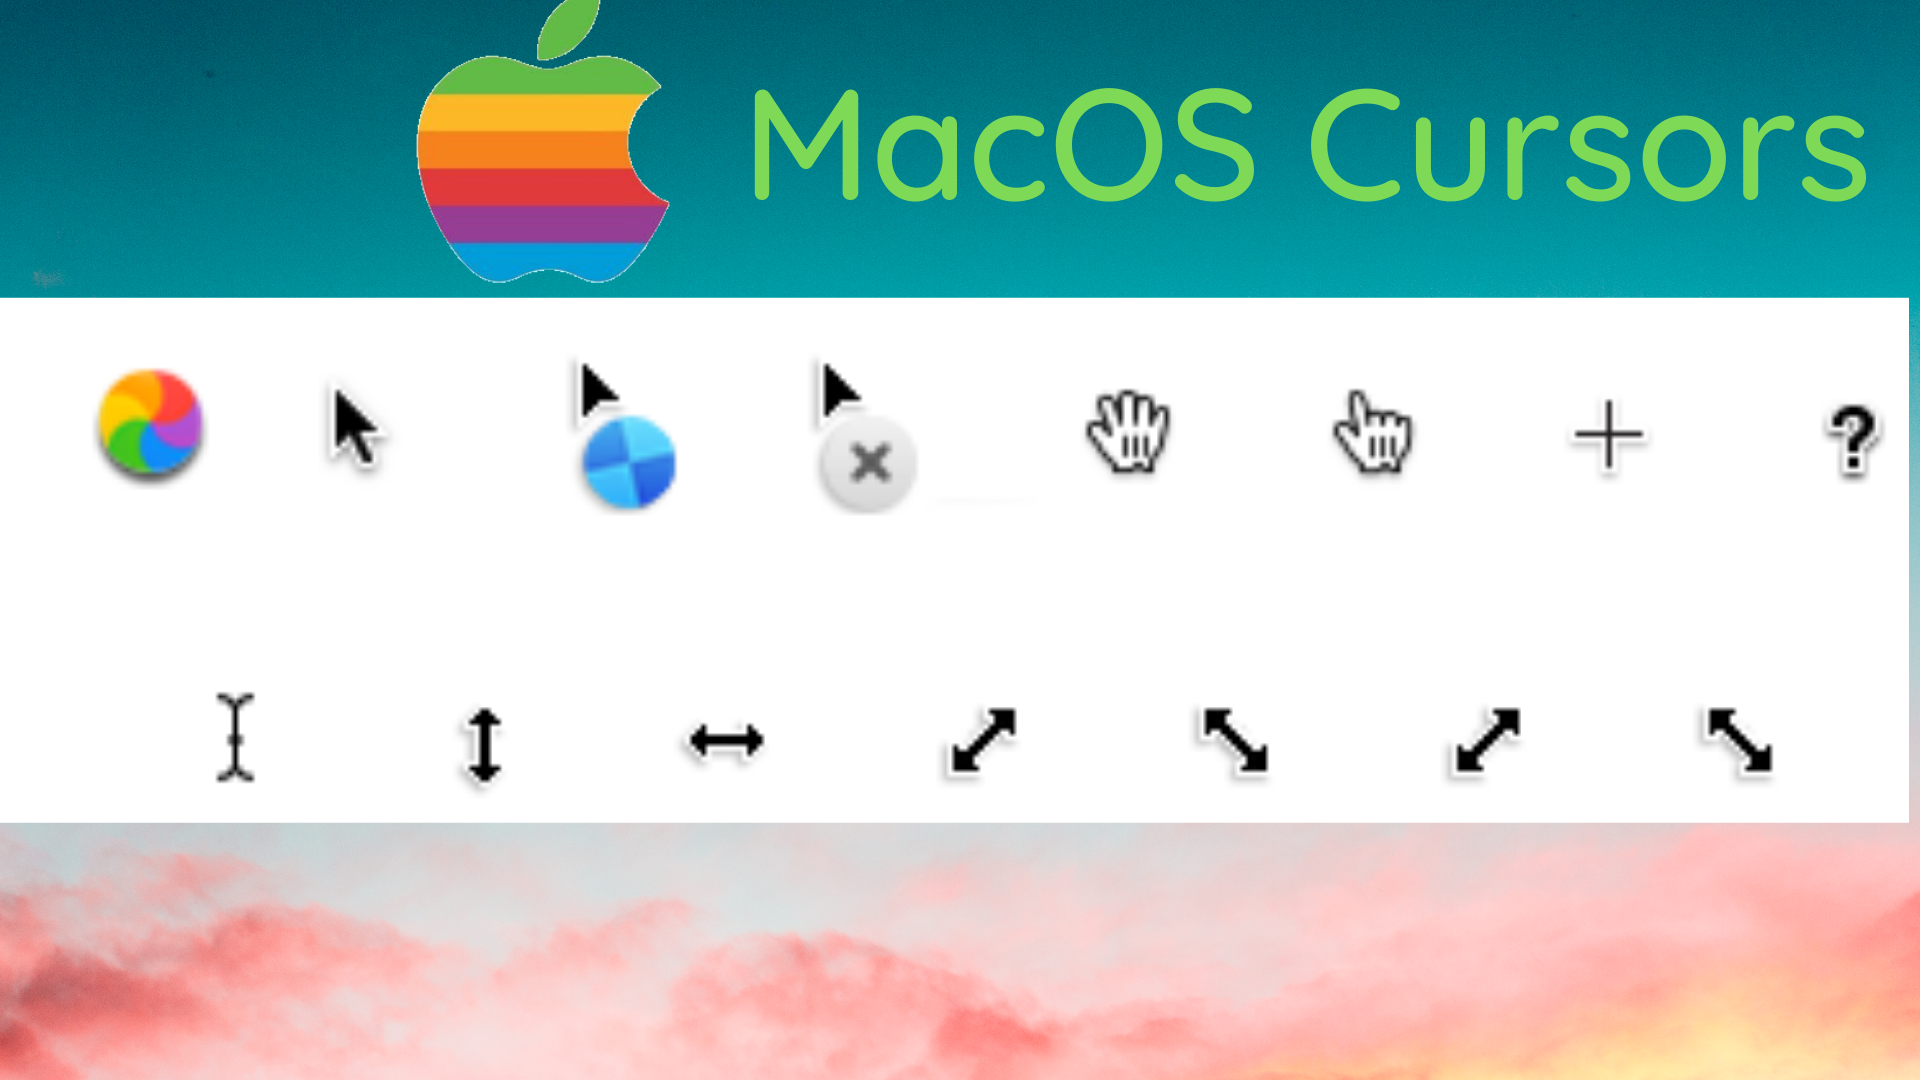 Mac OS X Cursor Pack by RaZcaLinSIDe on DeviantArt